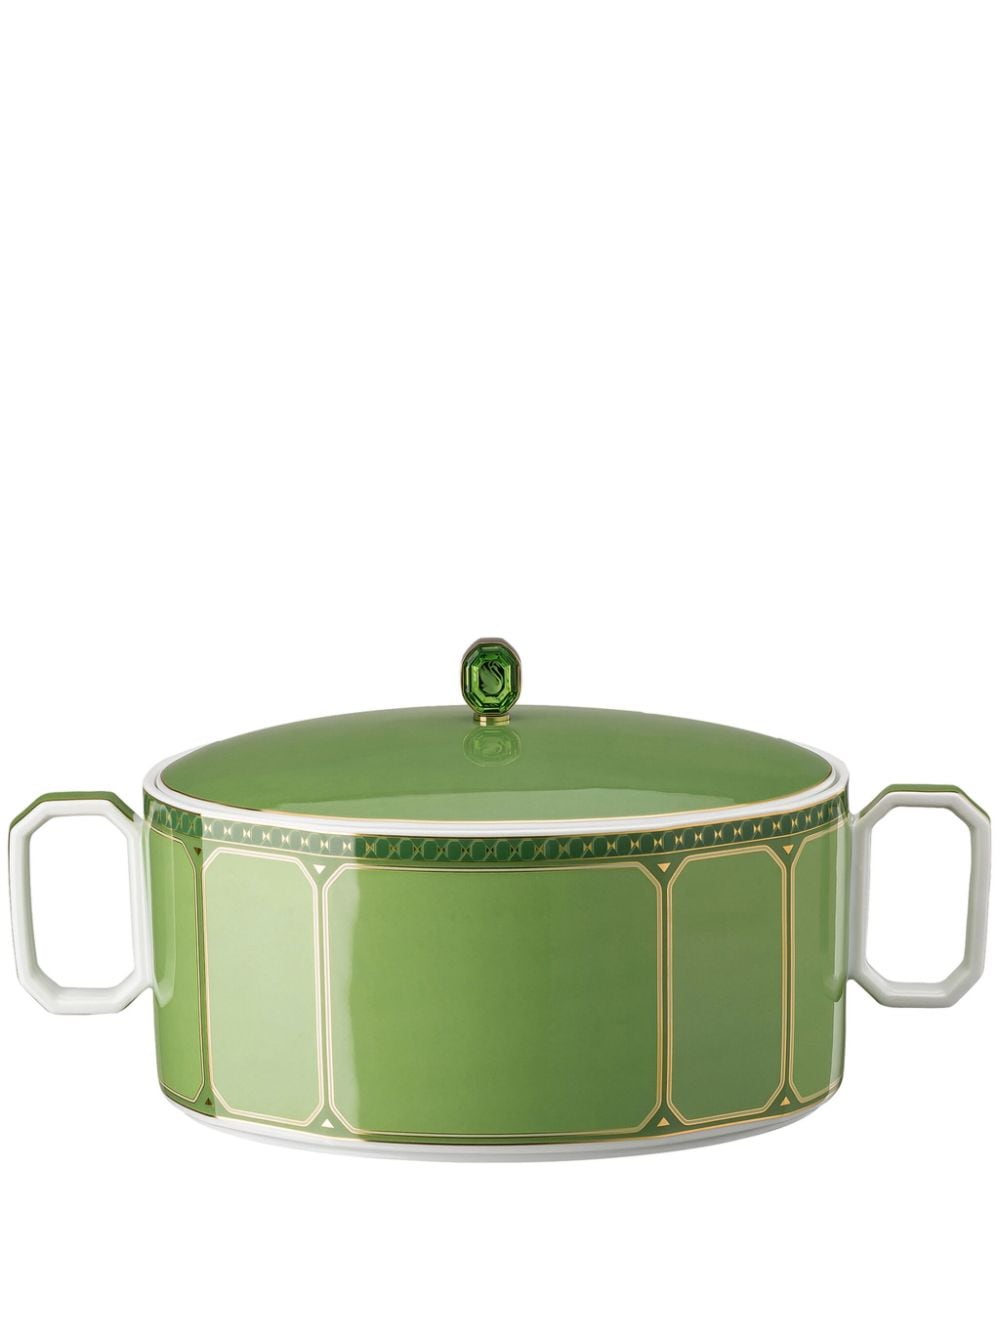 Swarovski x Rosenthal Signum Fern porcelain bowl (29cm x 17cm) - Green von Swarovski